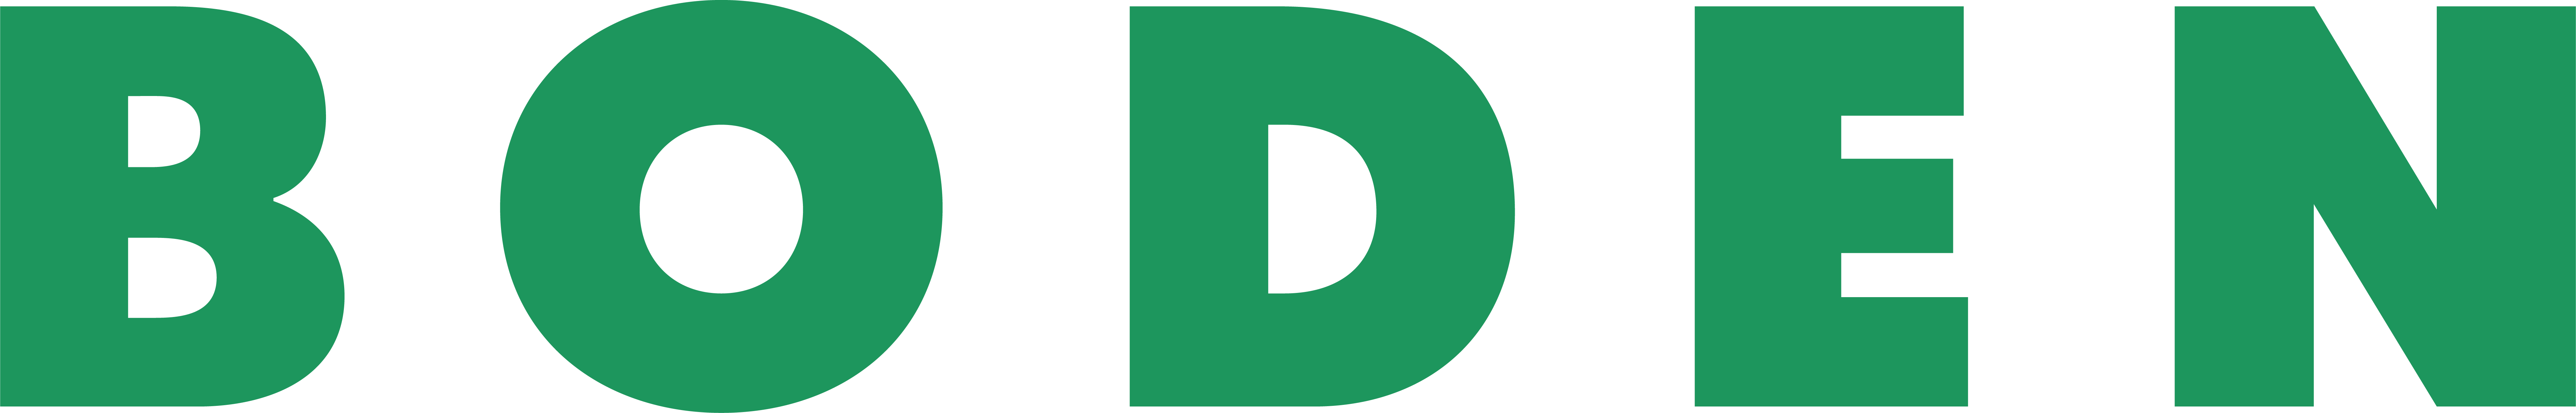 Boden AU_logo